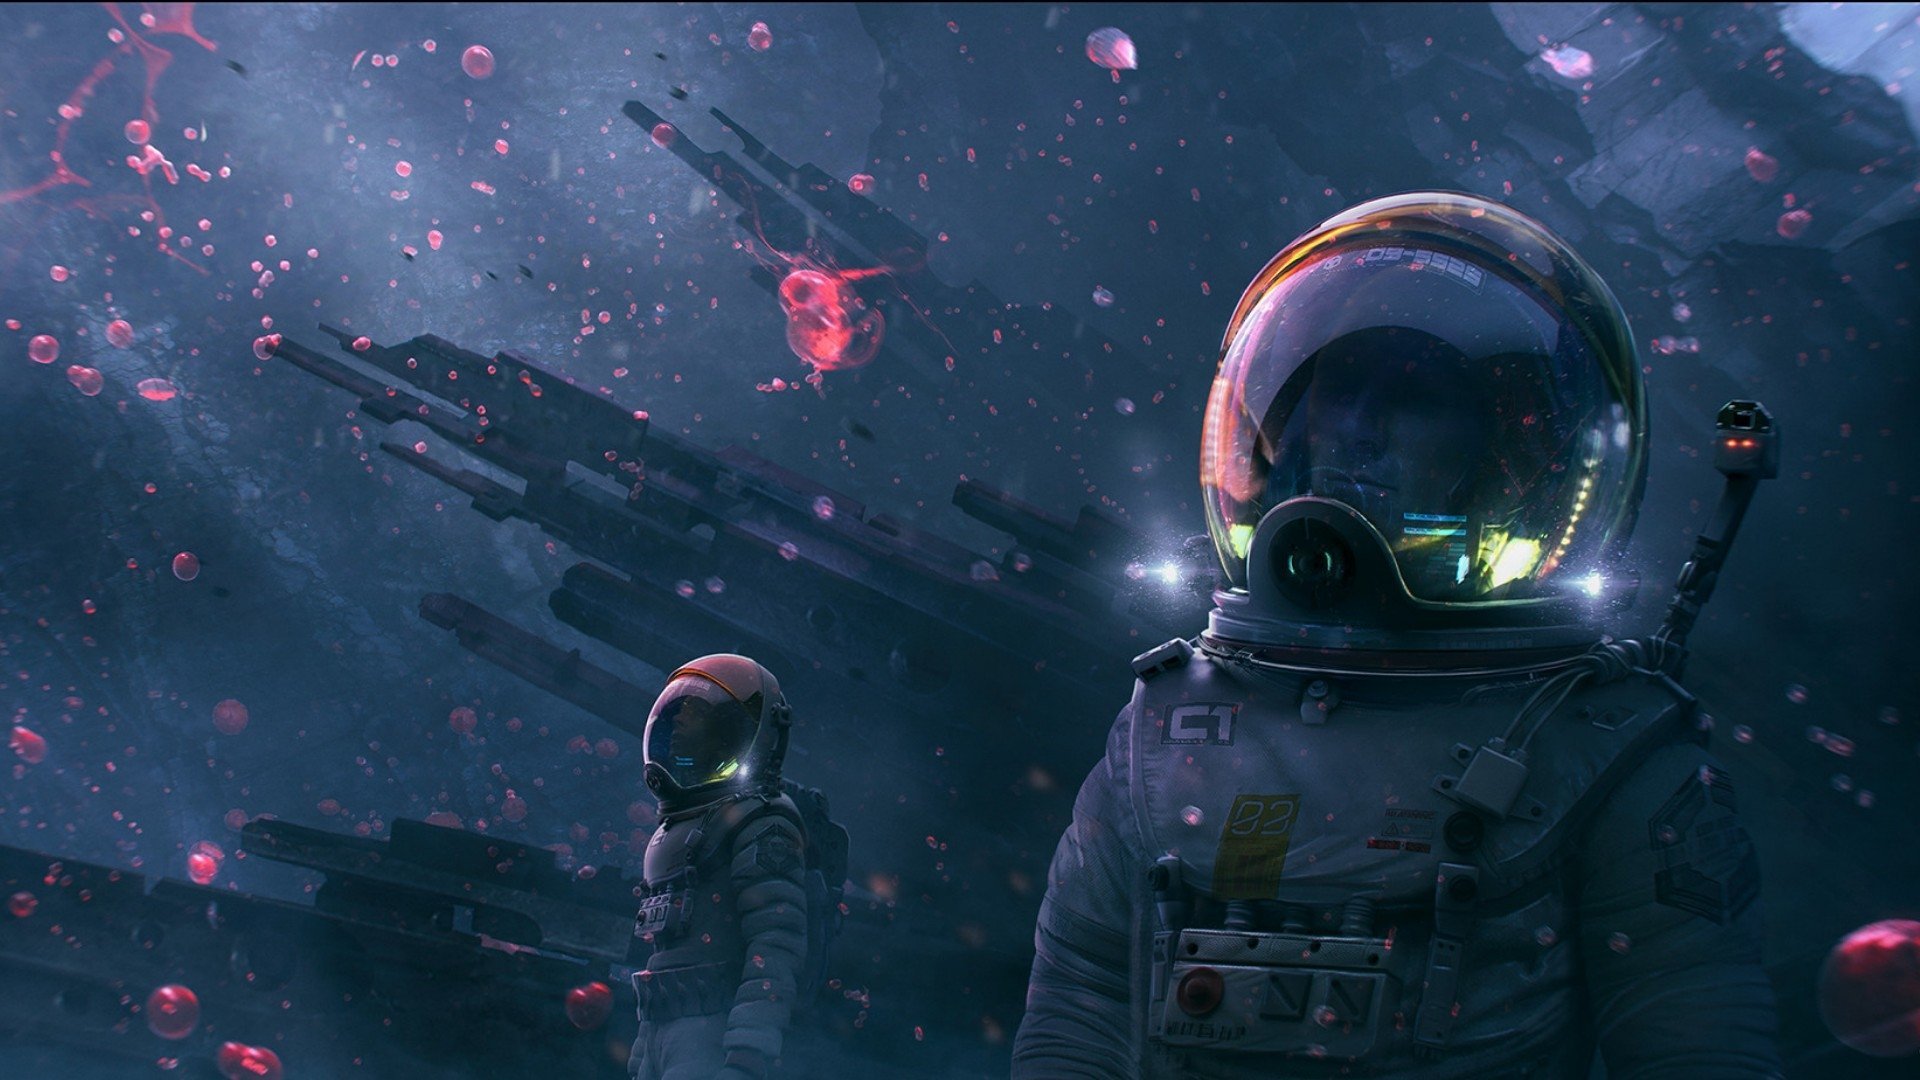 Sci Fi Astronaut HD Wallpaper Background Image 1920x1080 1920x1080